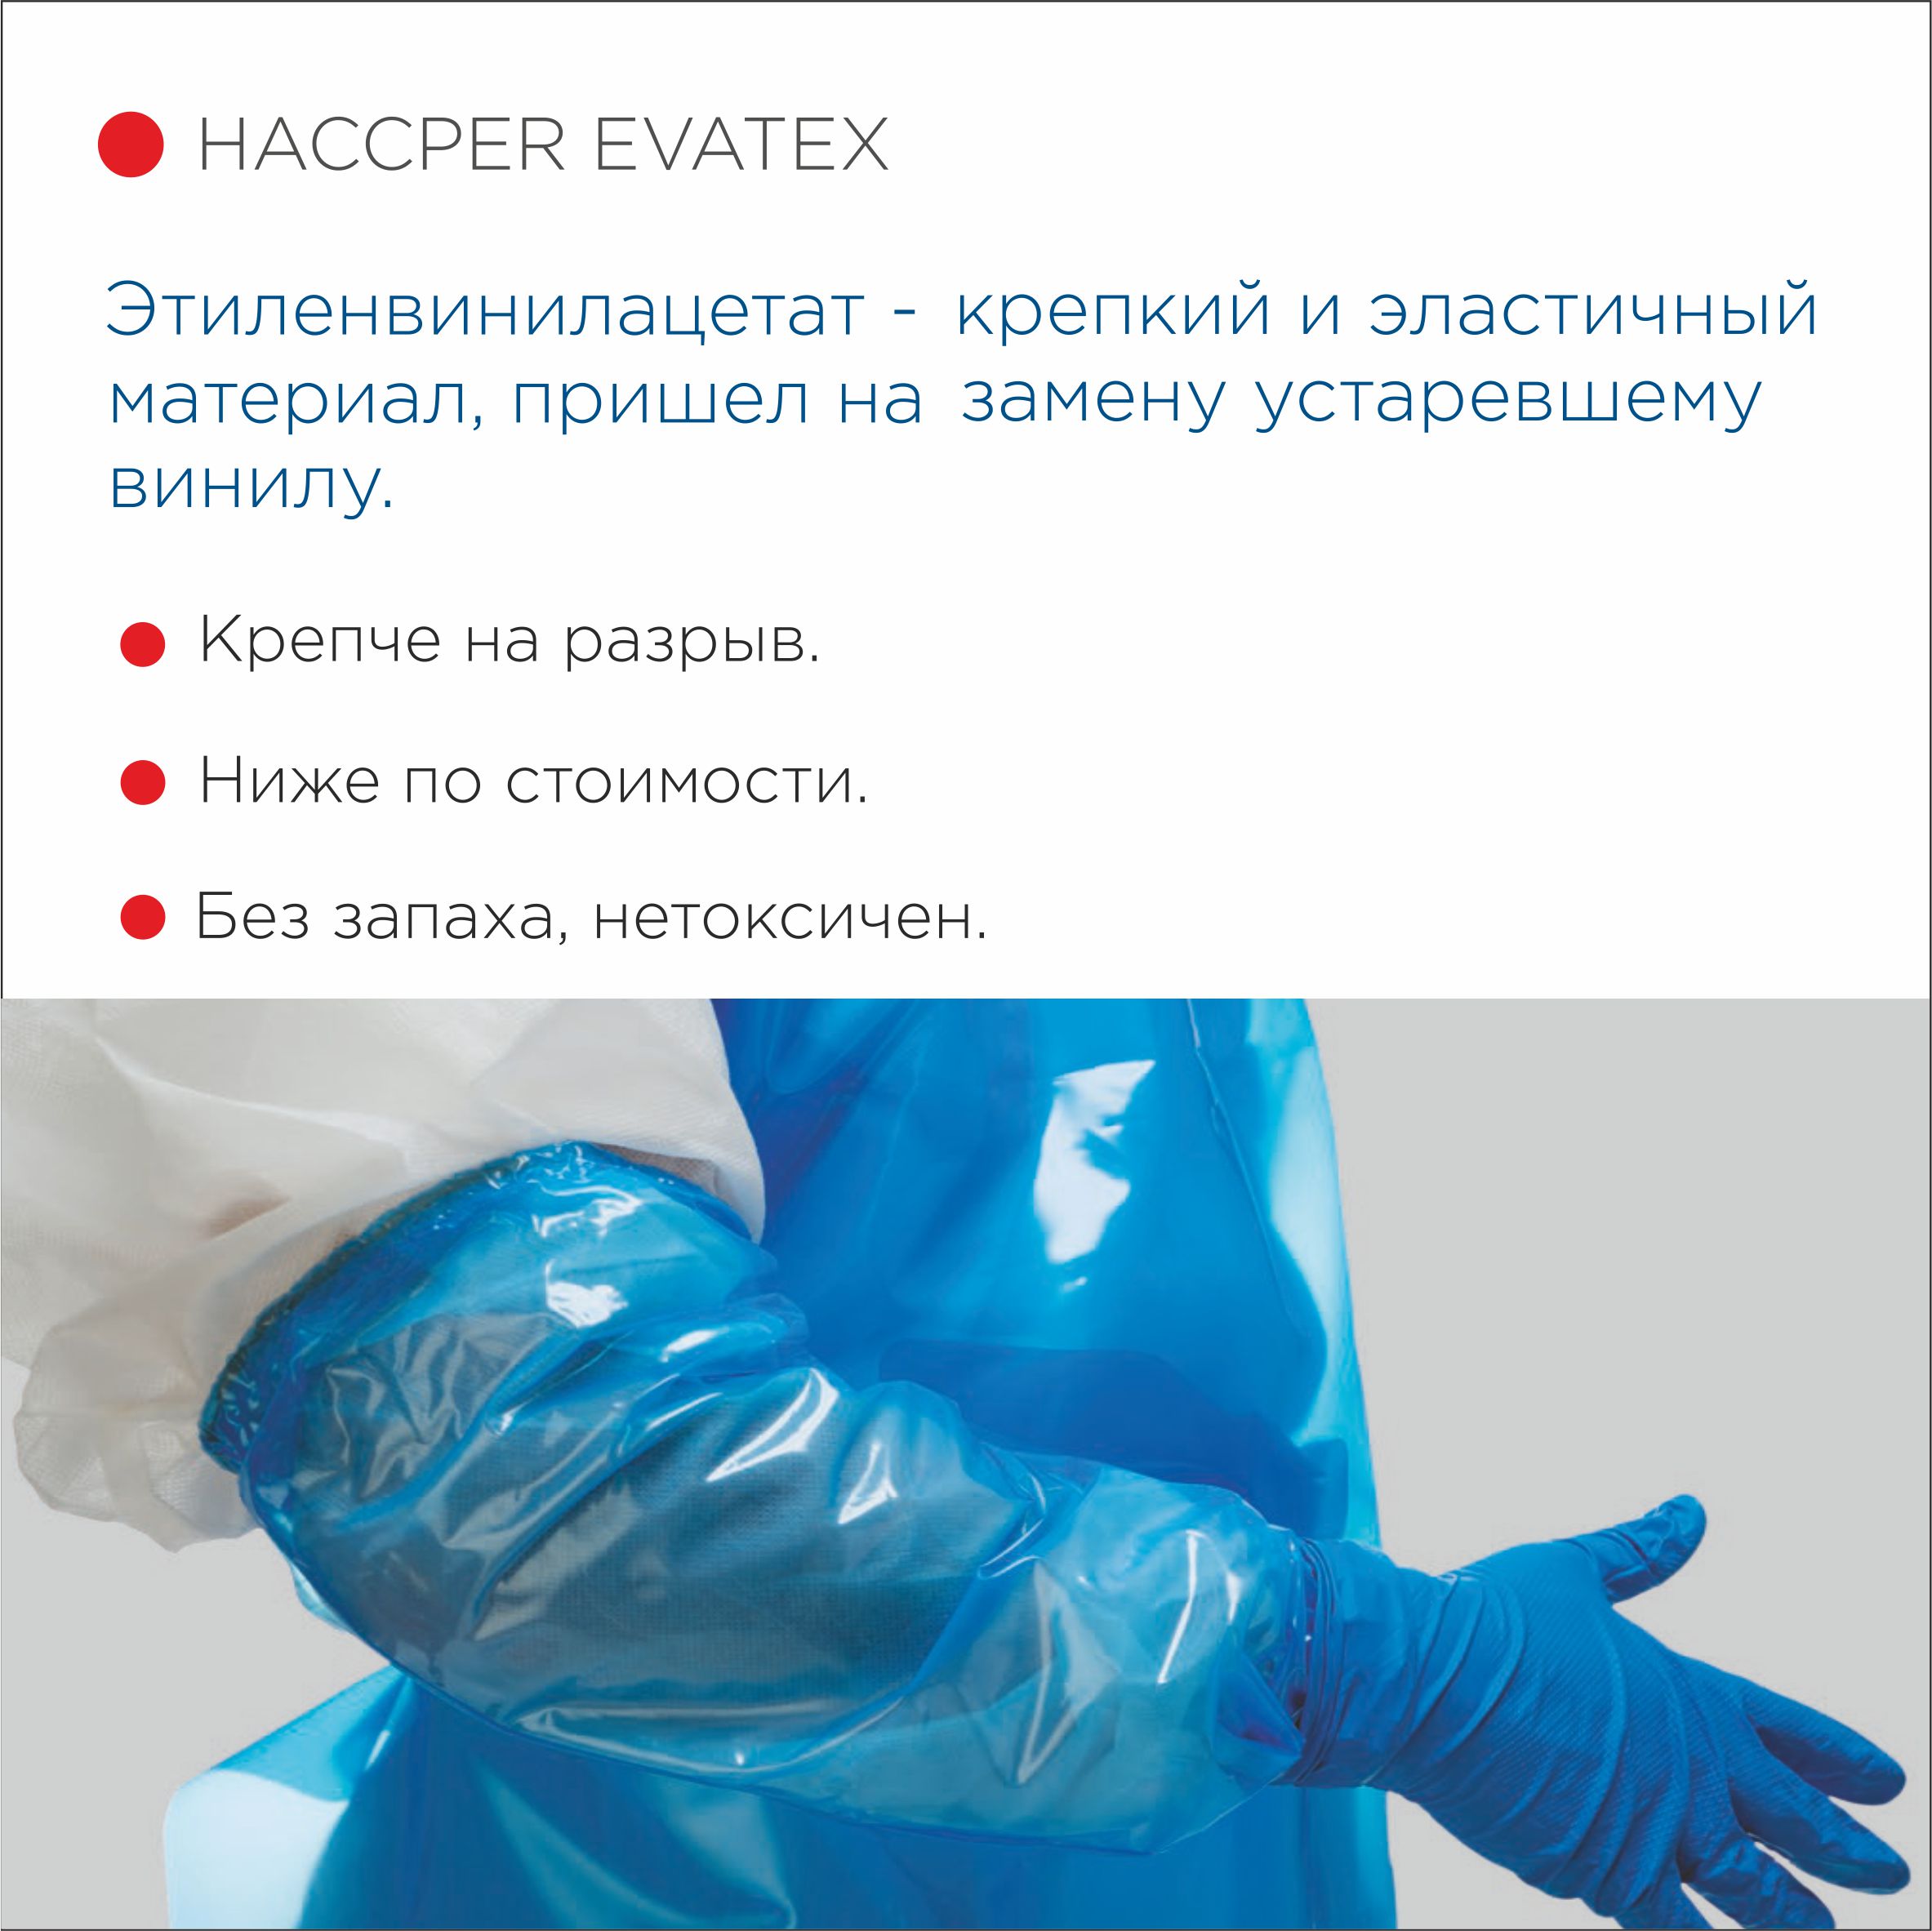 Фартук HACCPER Evatex DUO 1500*830, 200 мкм,  синий/белый